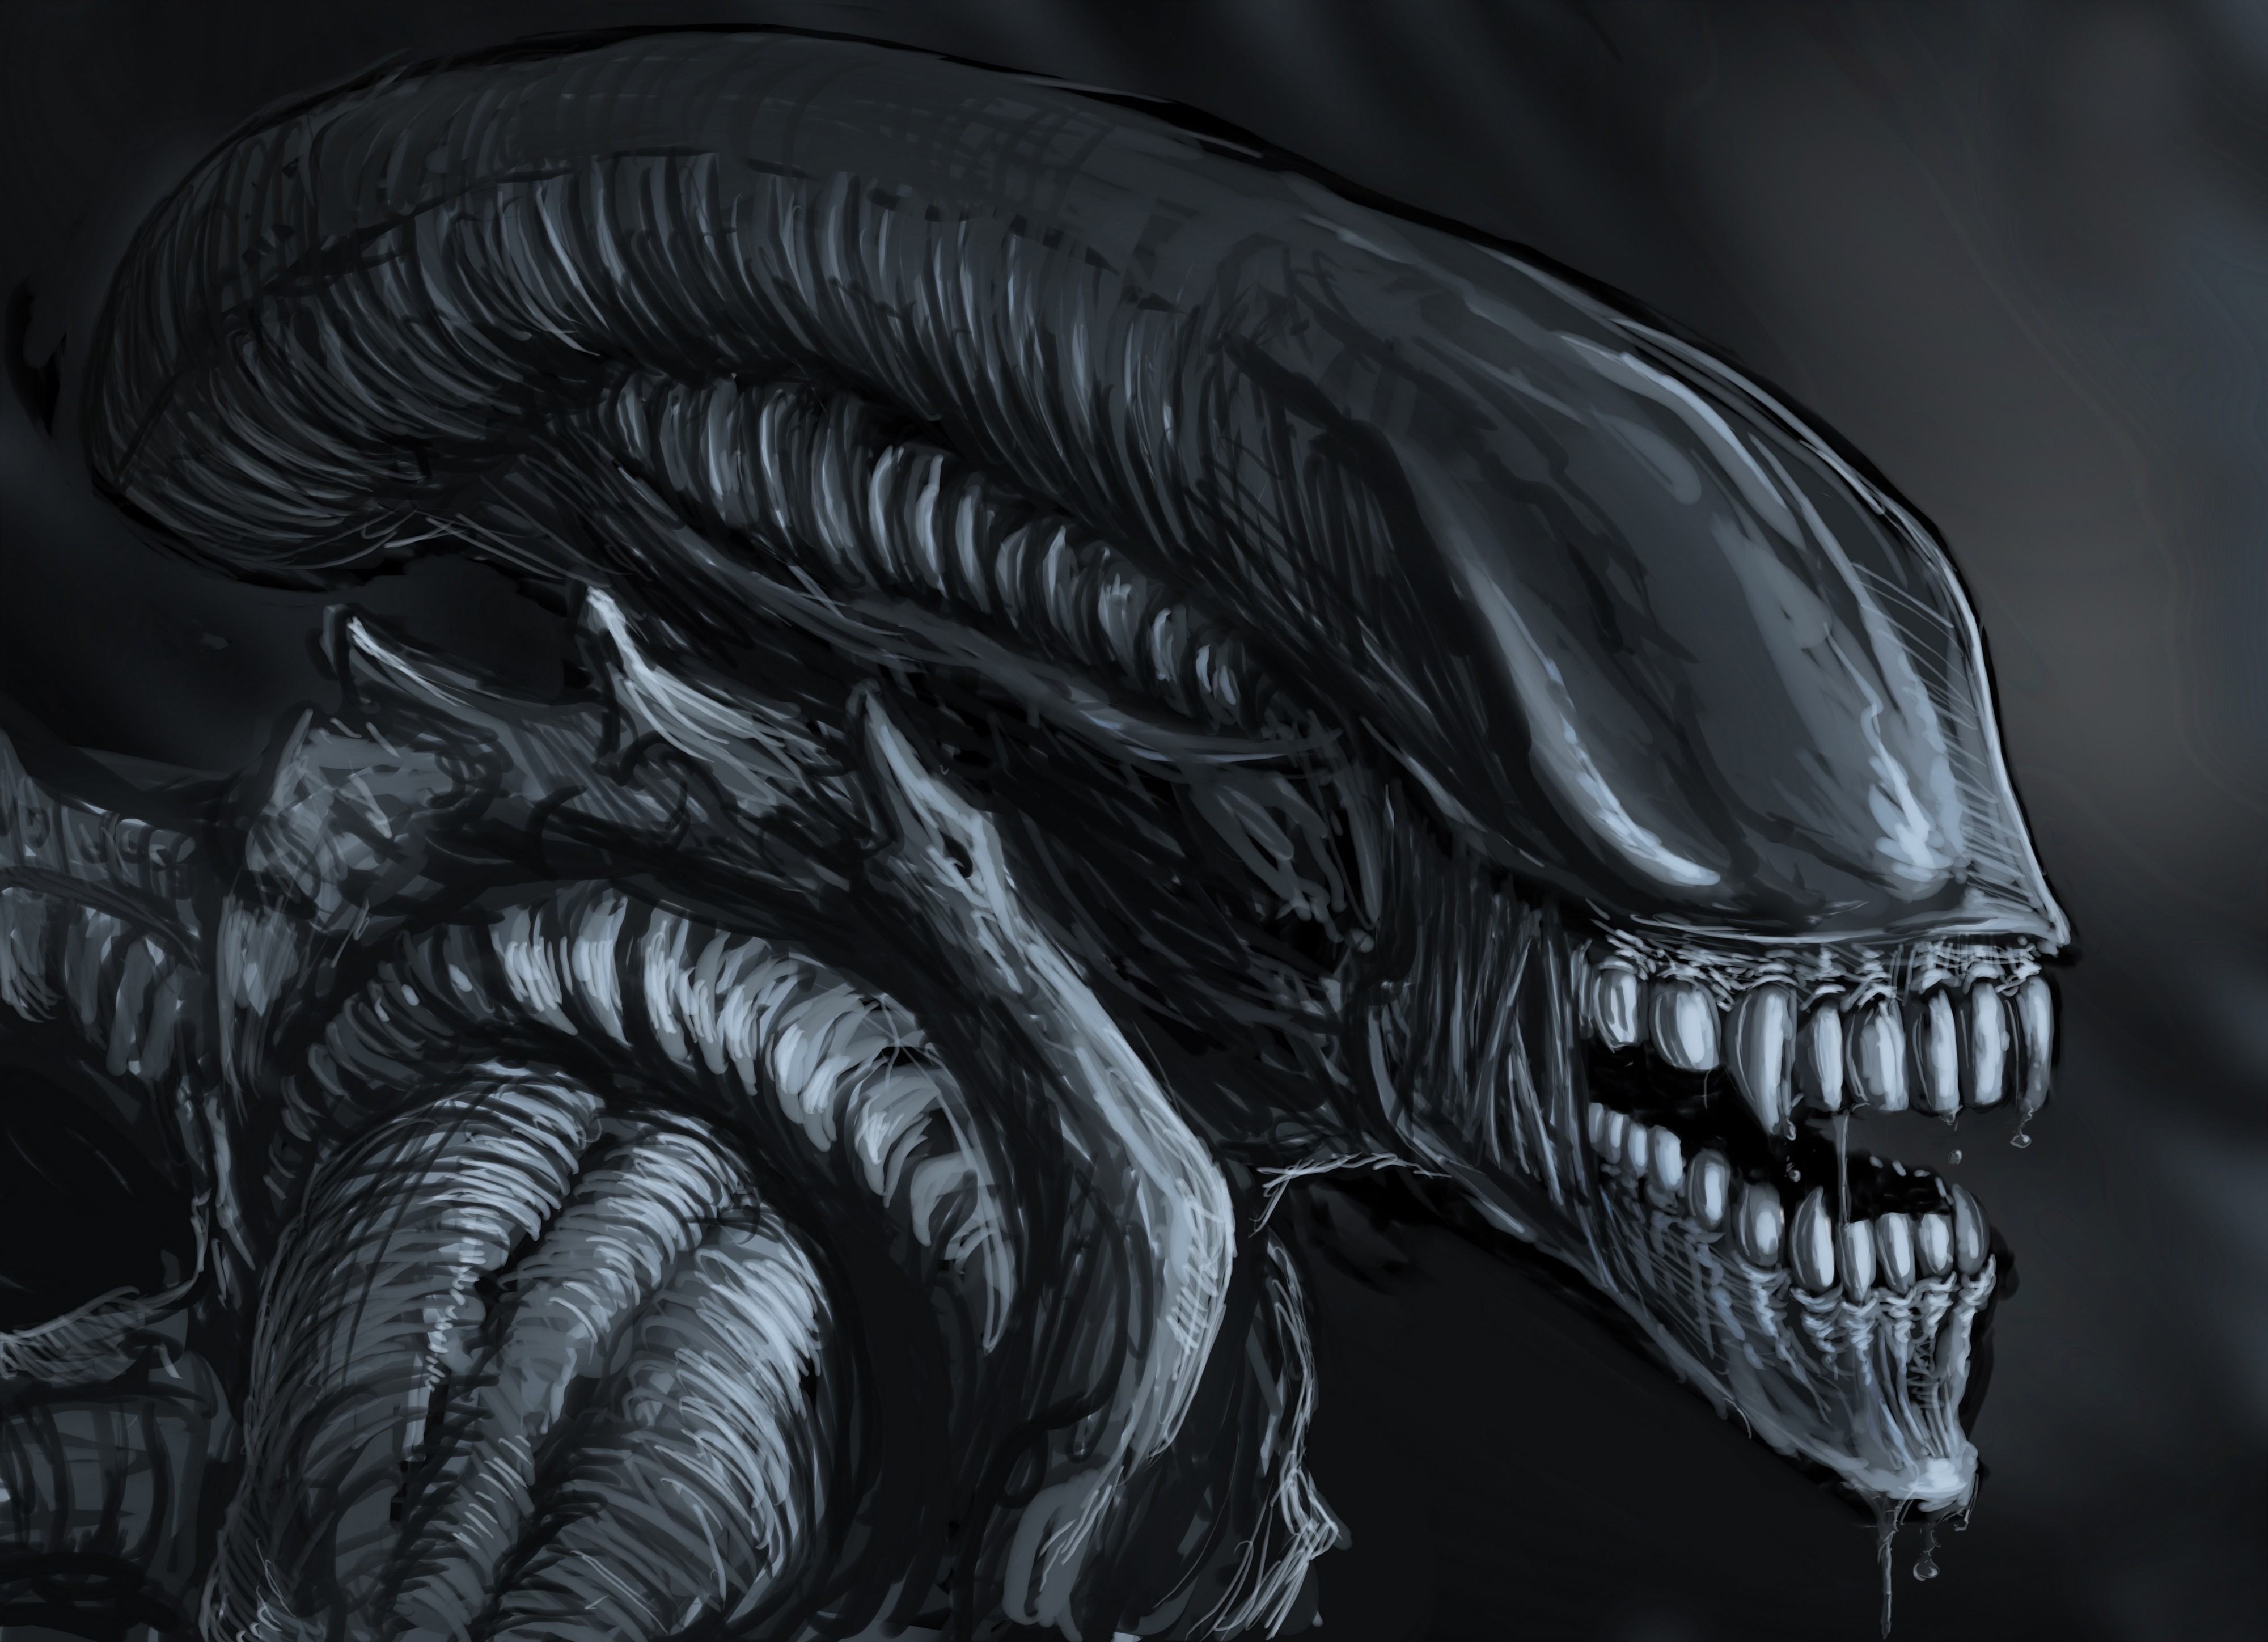 General 4000x2896 artwork Xenomorph Alien (Creature) creature science fiction horror movie characters